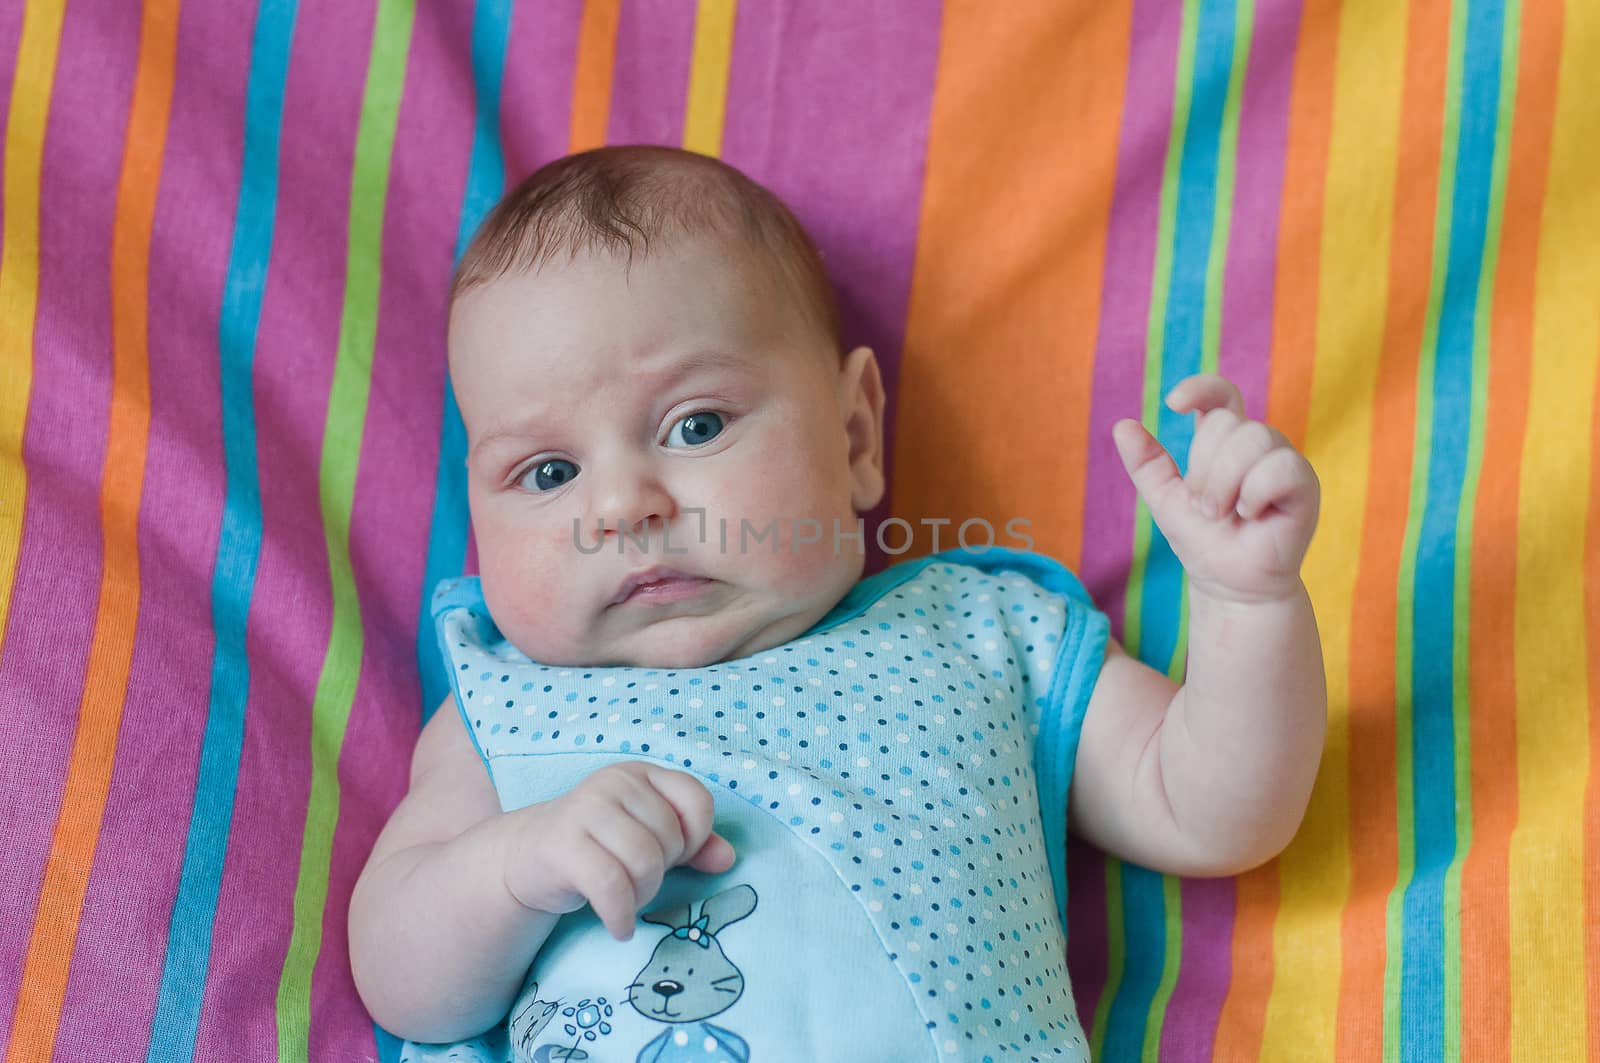 Little baby closeup portrait on the coloured towel